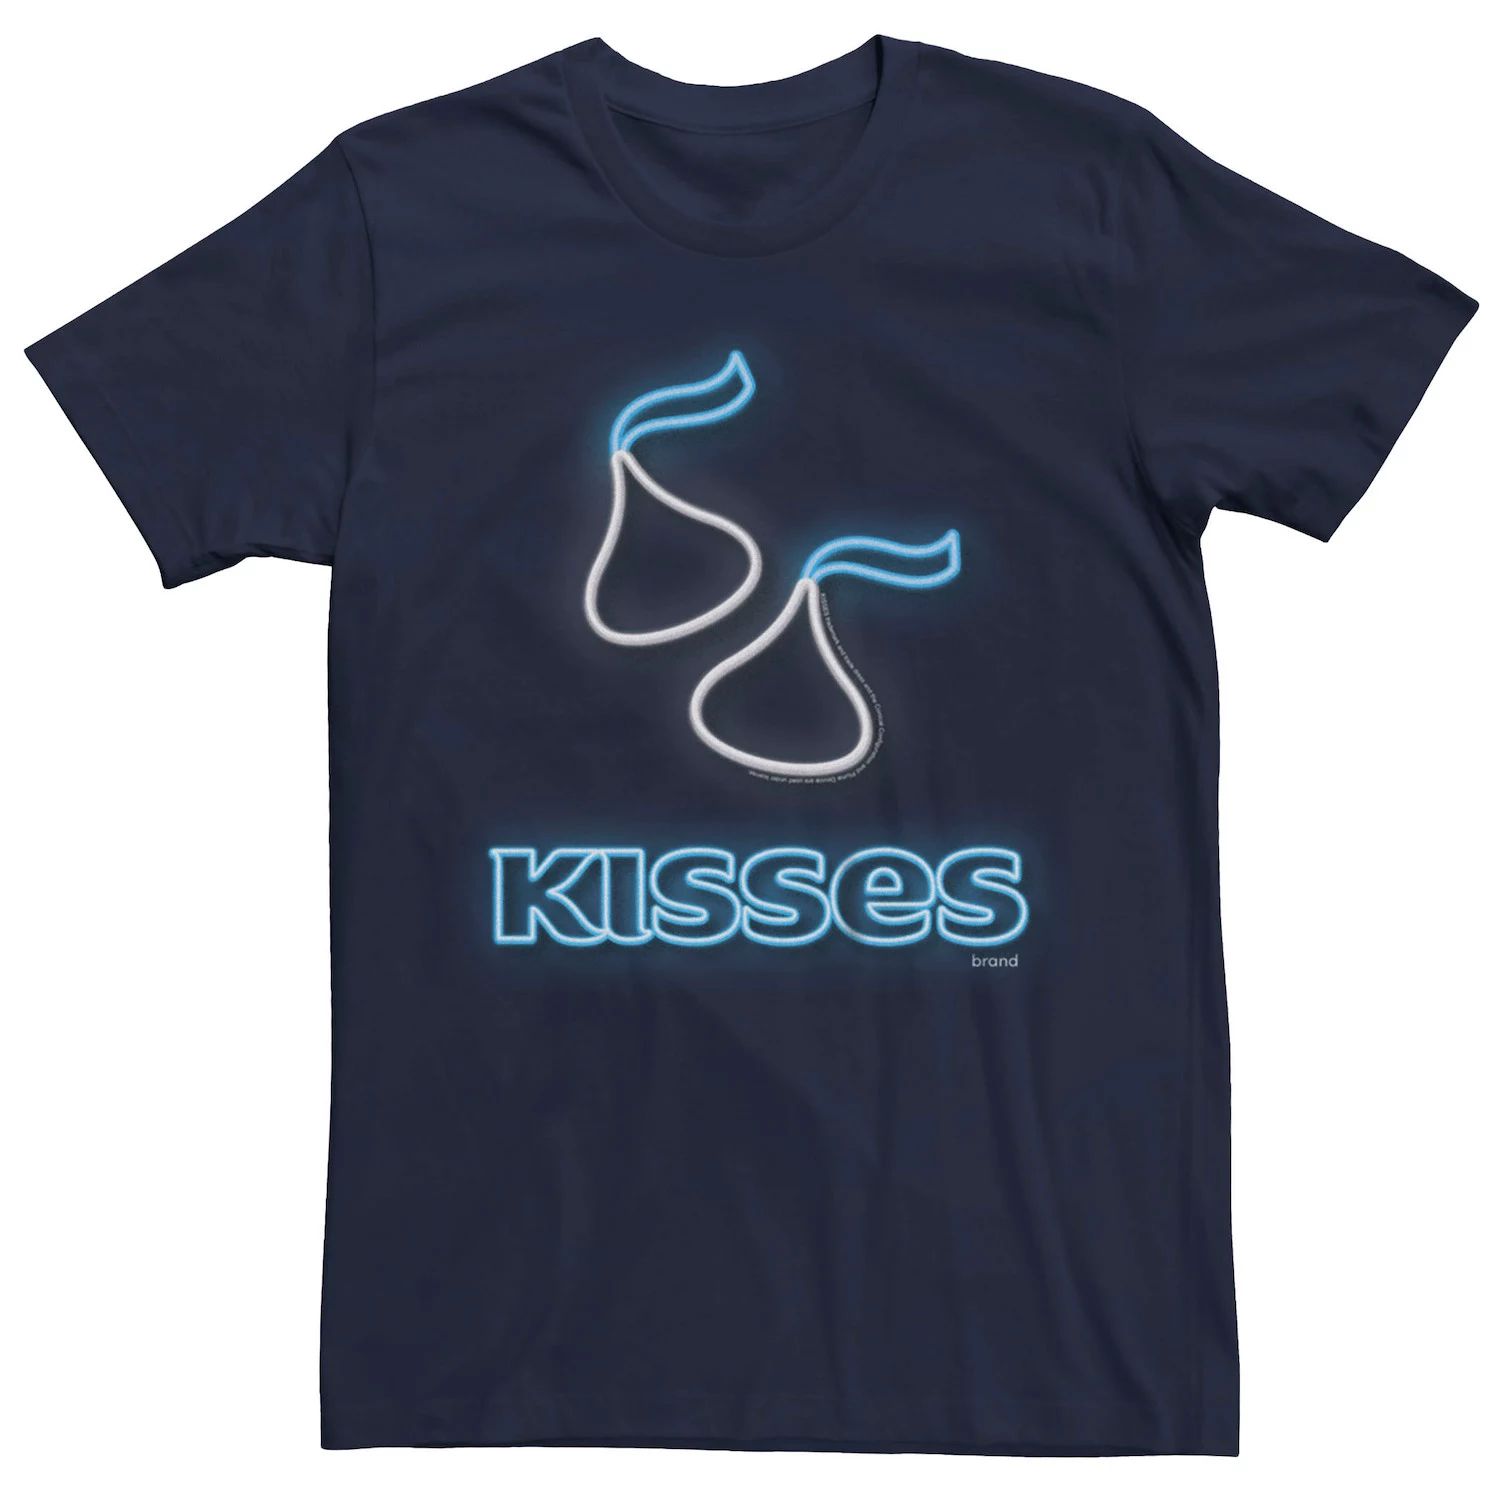 Мужская футболка Hershey's Kisses с неоновой вывеской Licensed Character